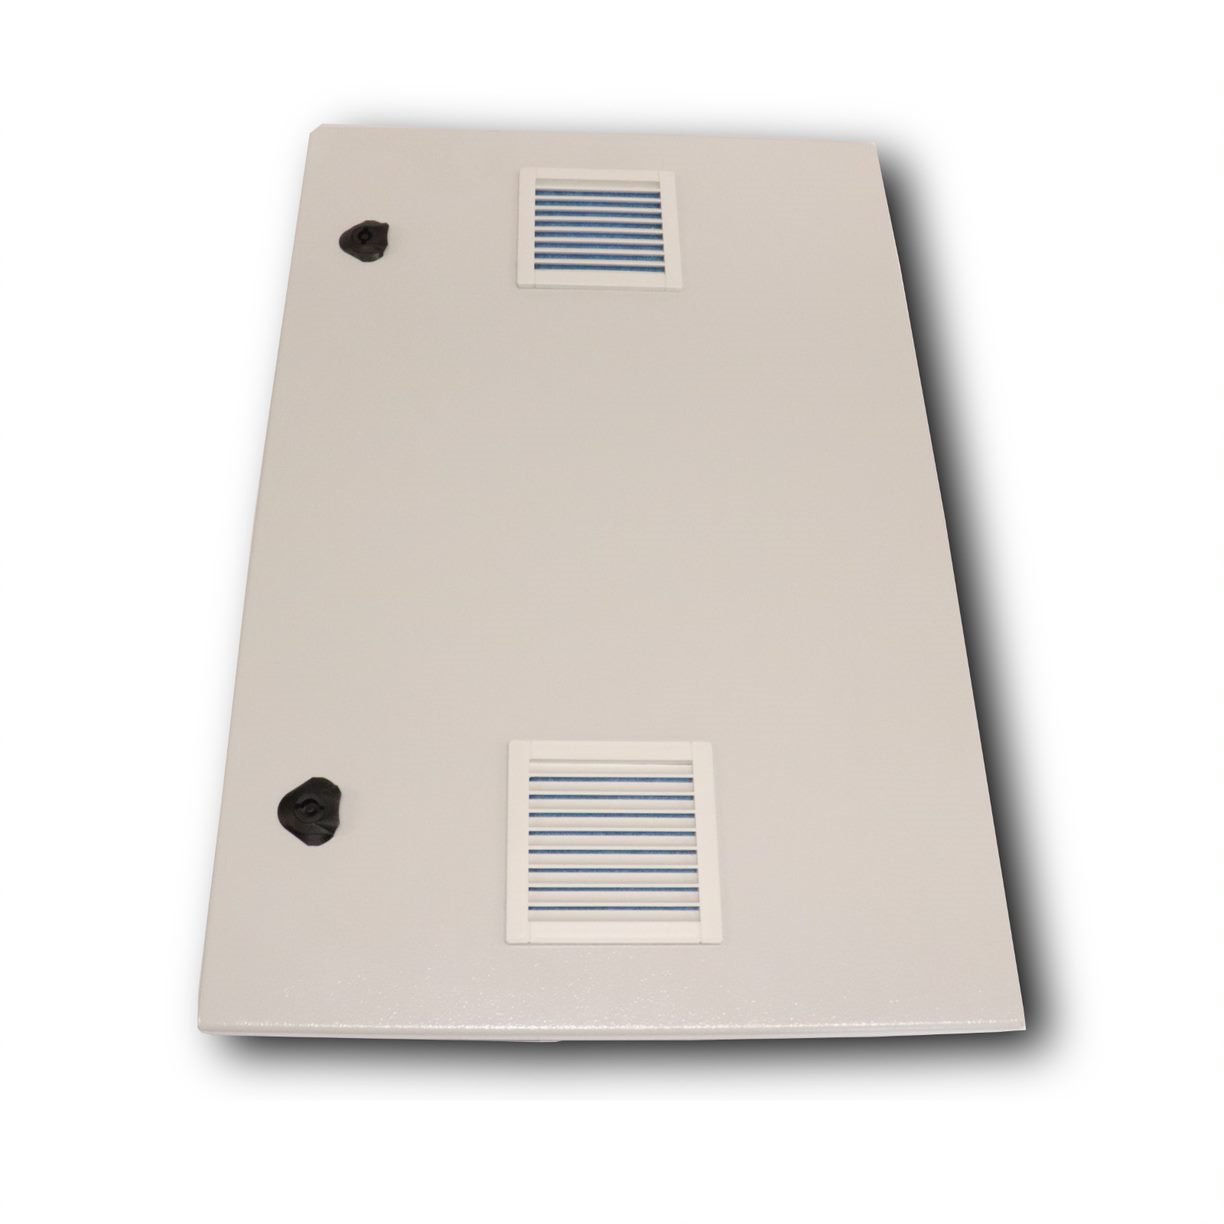 PSS* Compact Outdoor Enclosure IP54 Vented Door For MSB.806020 (4 x Vent)